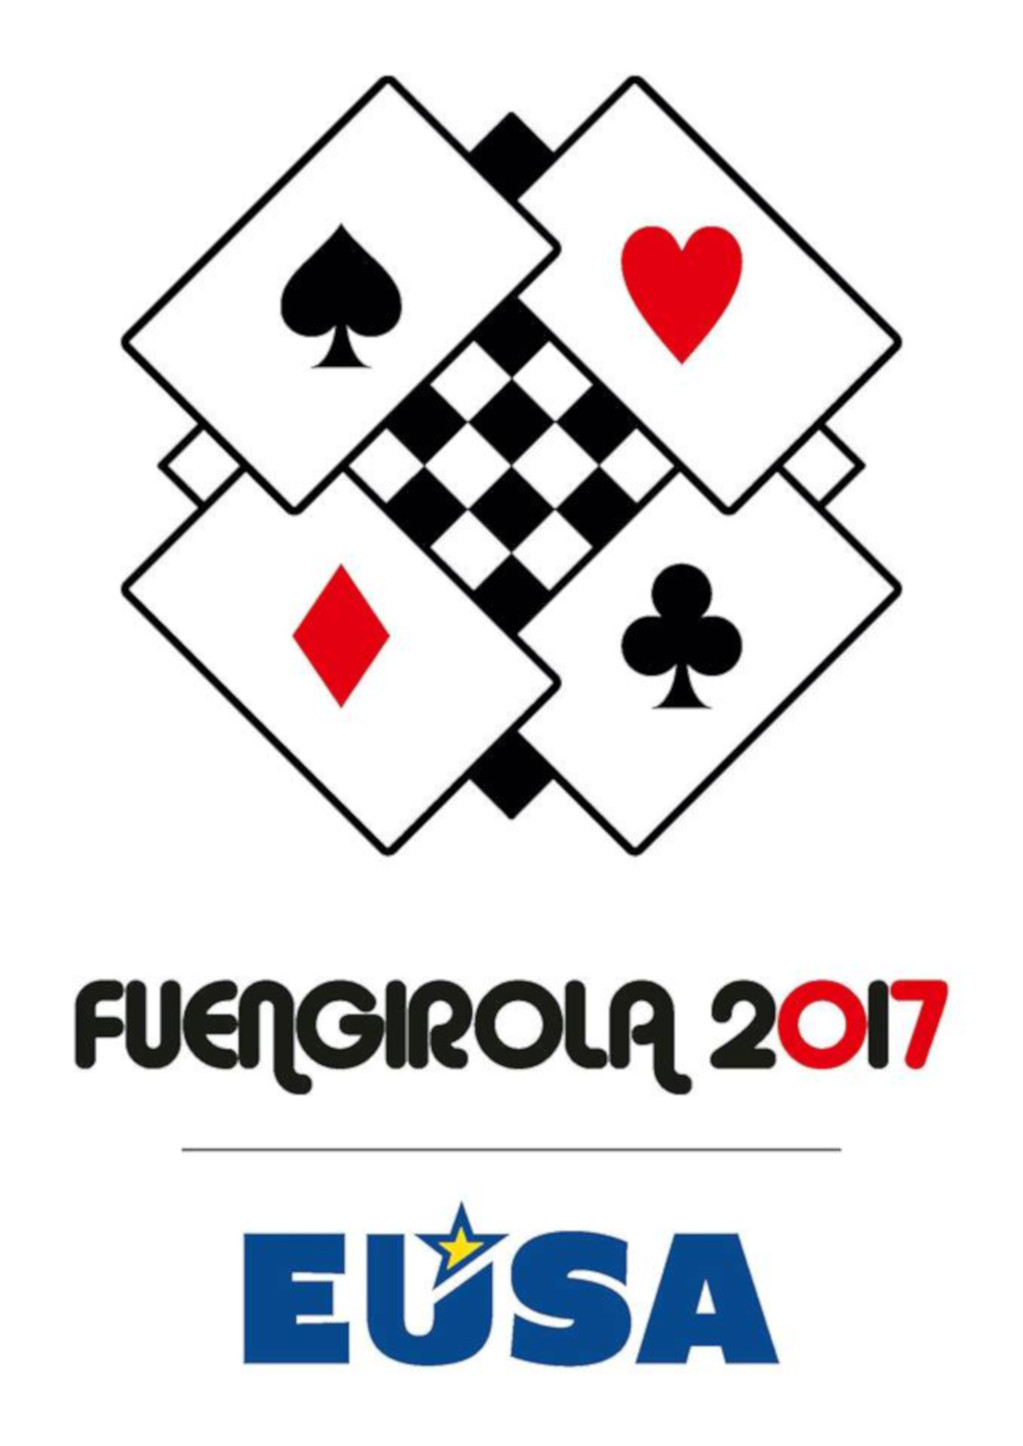 Best Logotype 2017